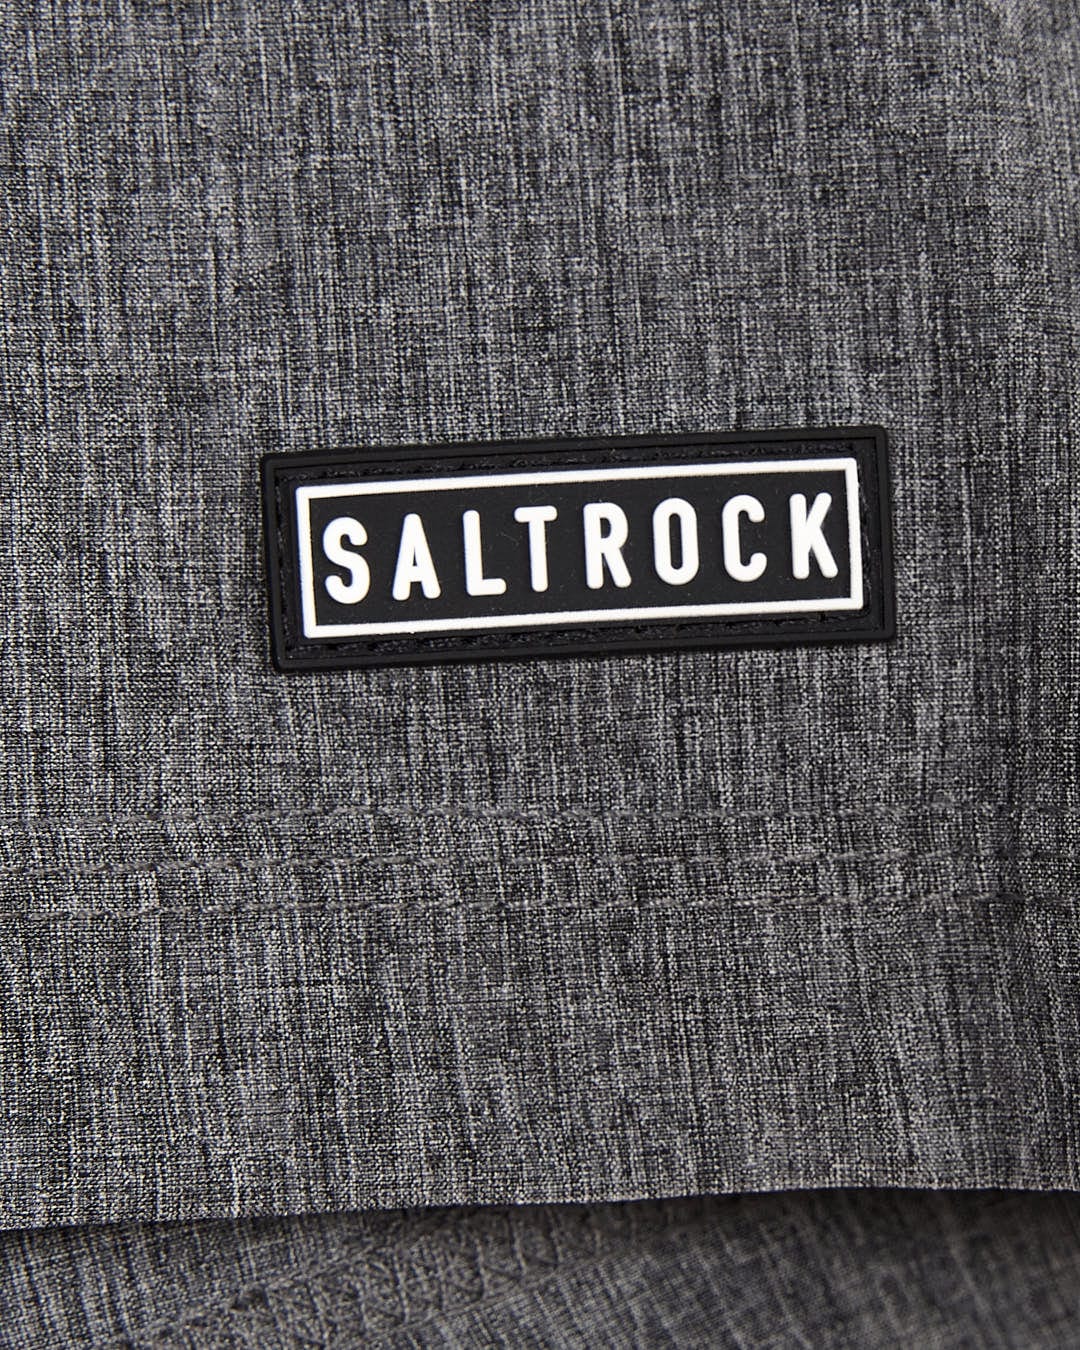 A close up of the Saltrock logo on a grey Amphibian - Kids Boardshorts shirt.